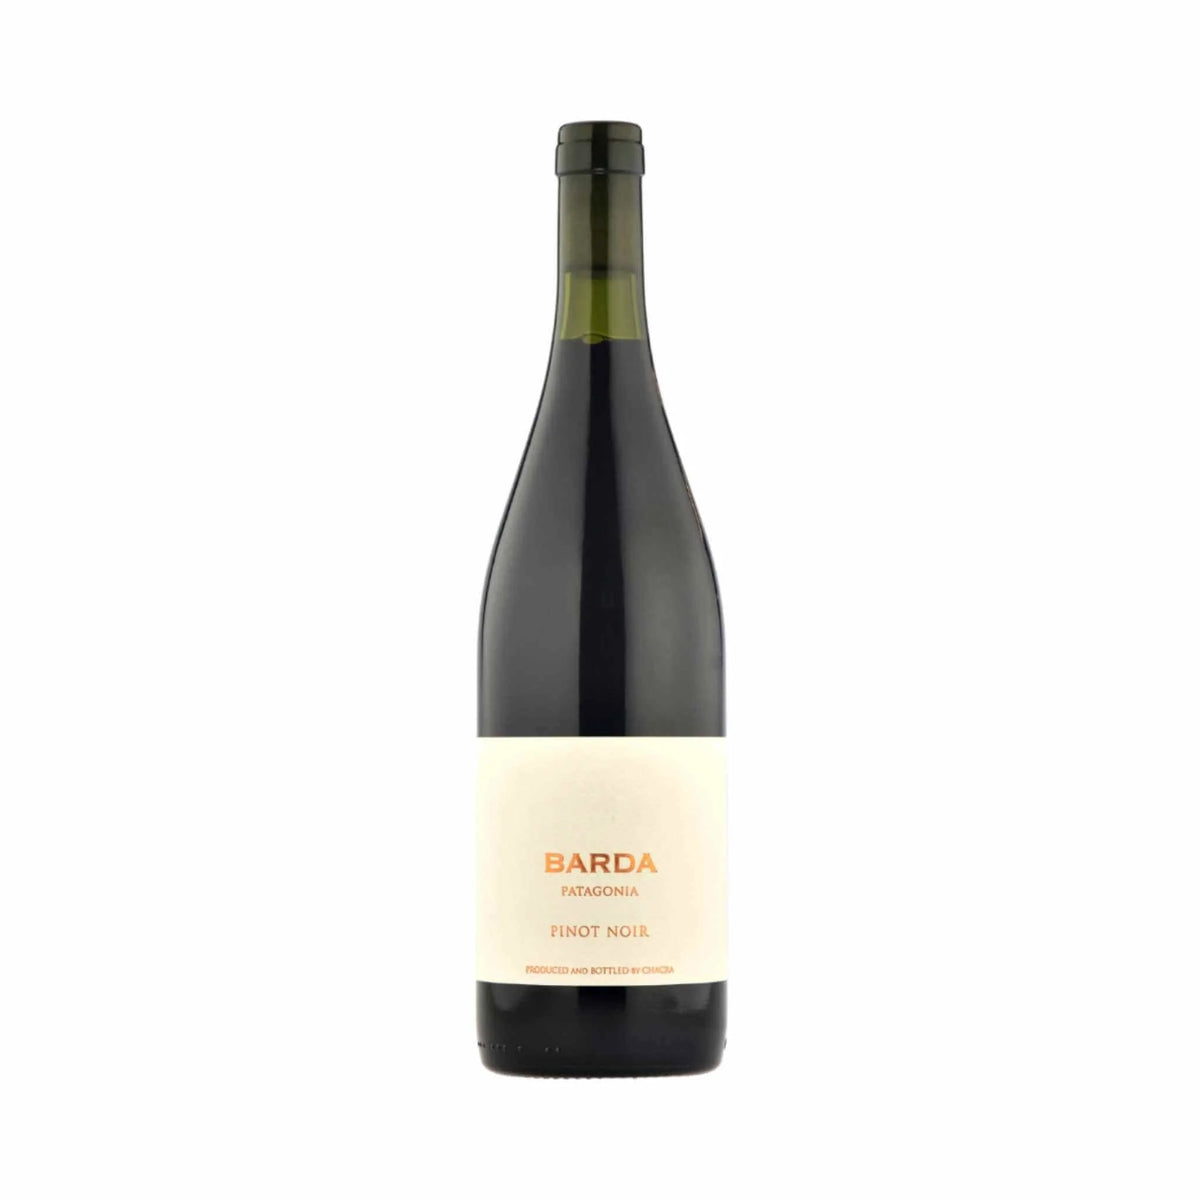 Chacra-Rotwein-Pinot Noir-2020 Pinot Noir Barda-WINECOM